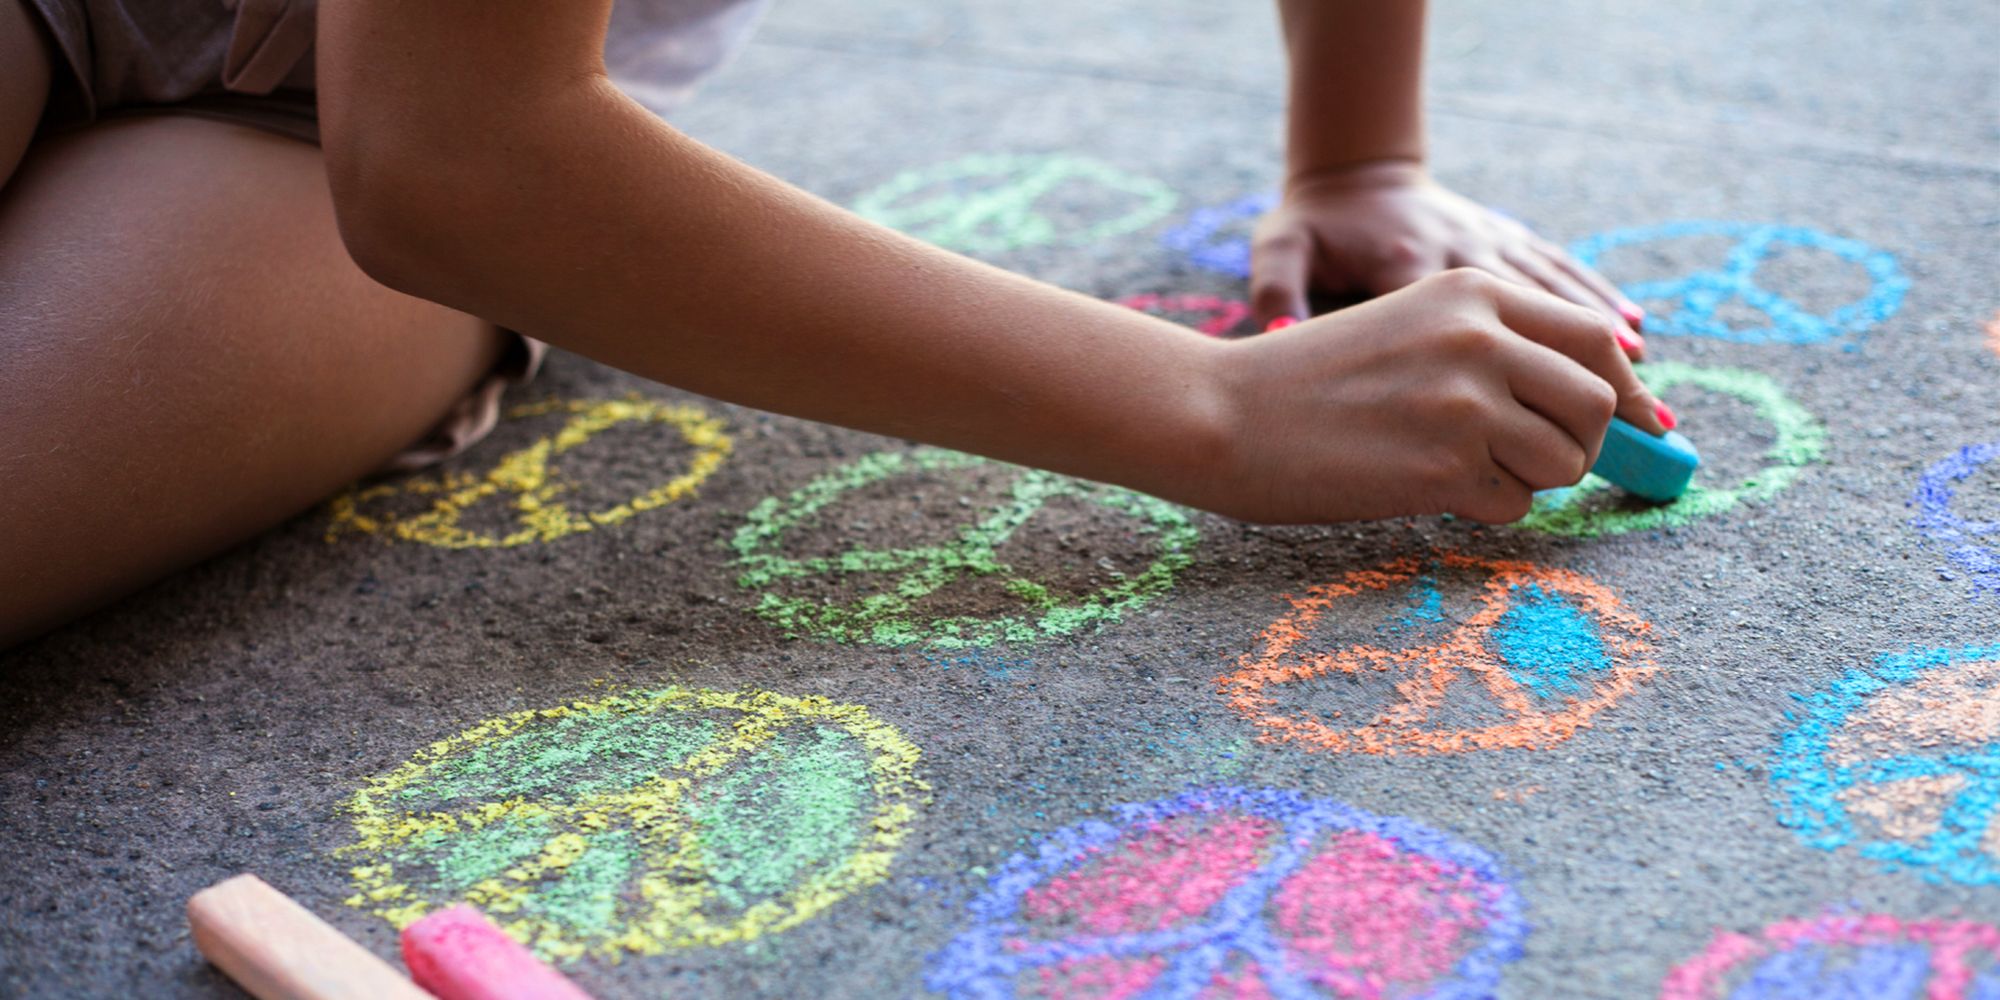 Chalk Art Idea for Kids - Toddler Approved